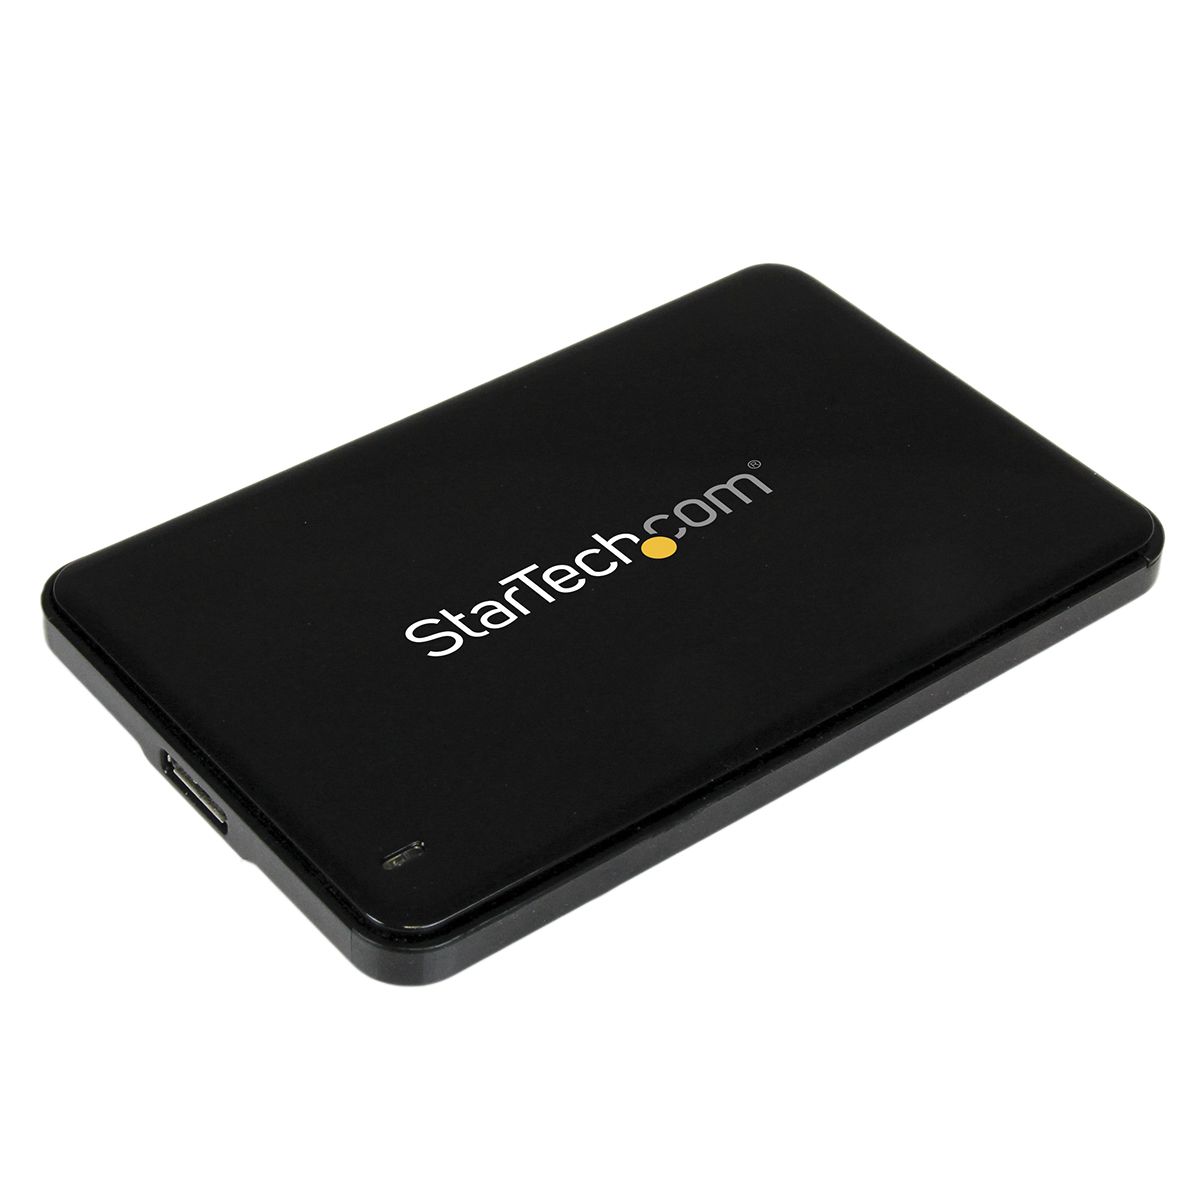 StarTech.com 2.5in SATA Hard Drive Enclosure, USB 3.0